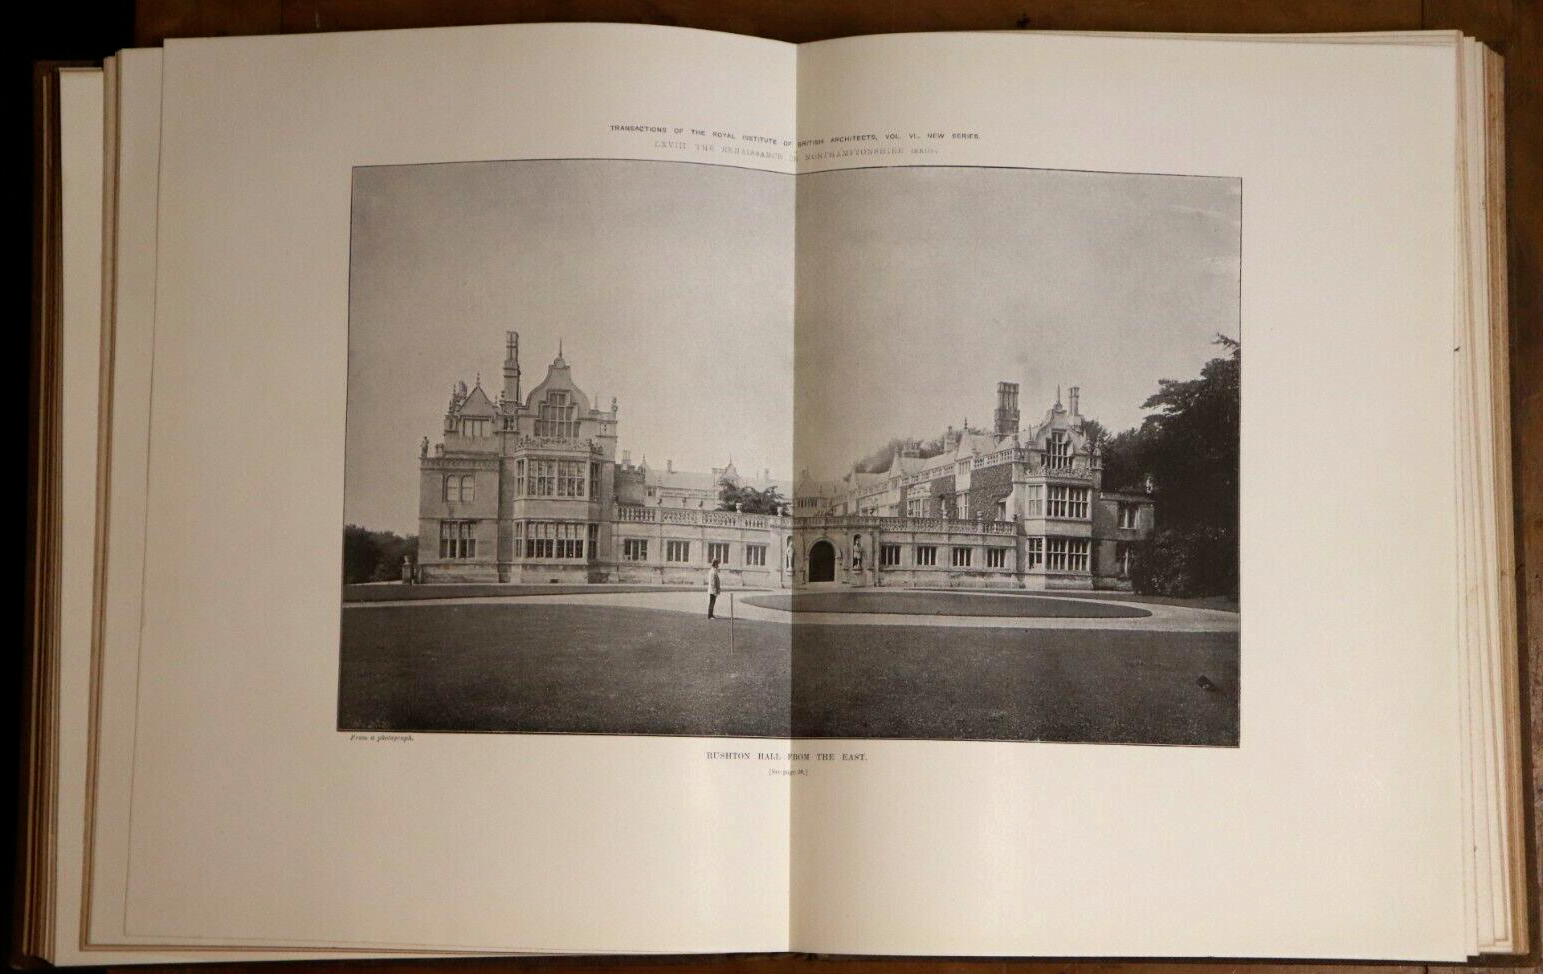 1890 Royal Institute British Architects Transactions Antique Architecture Book